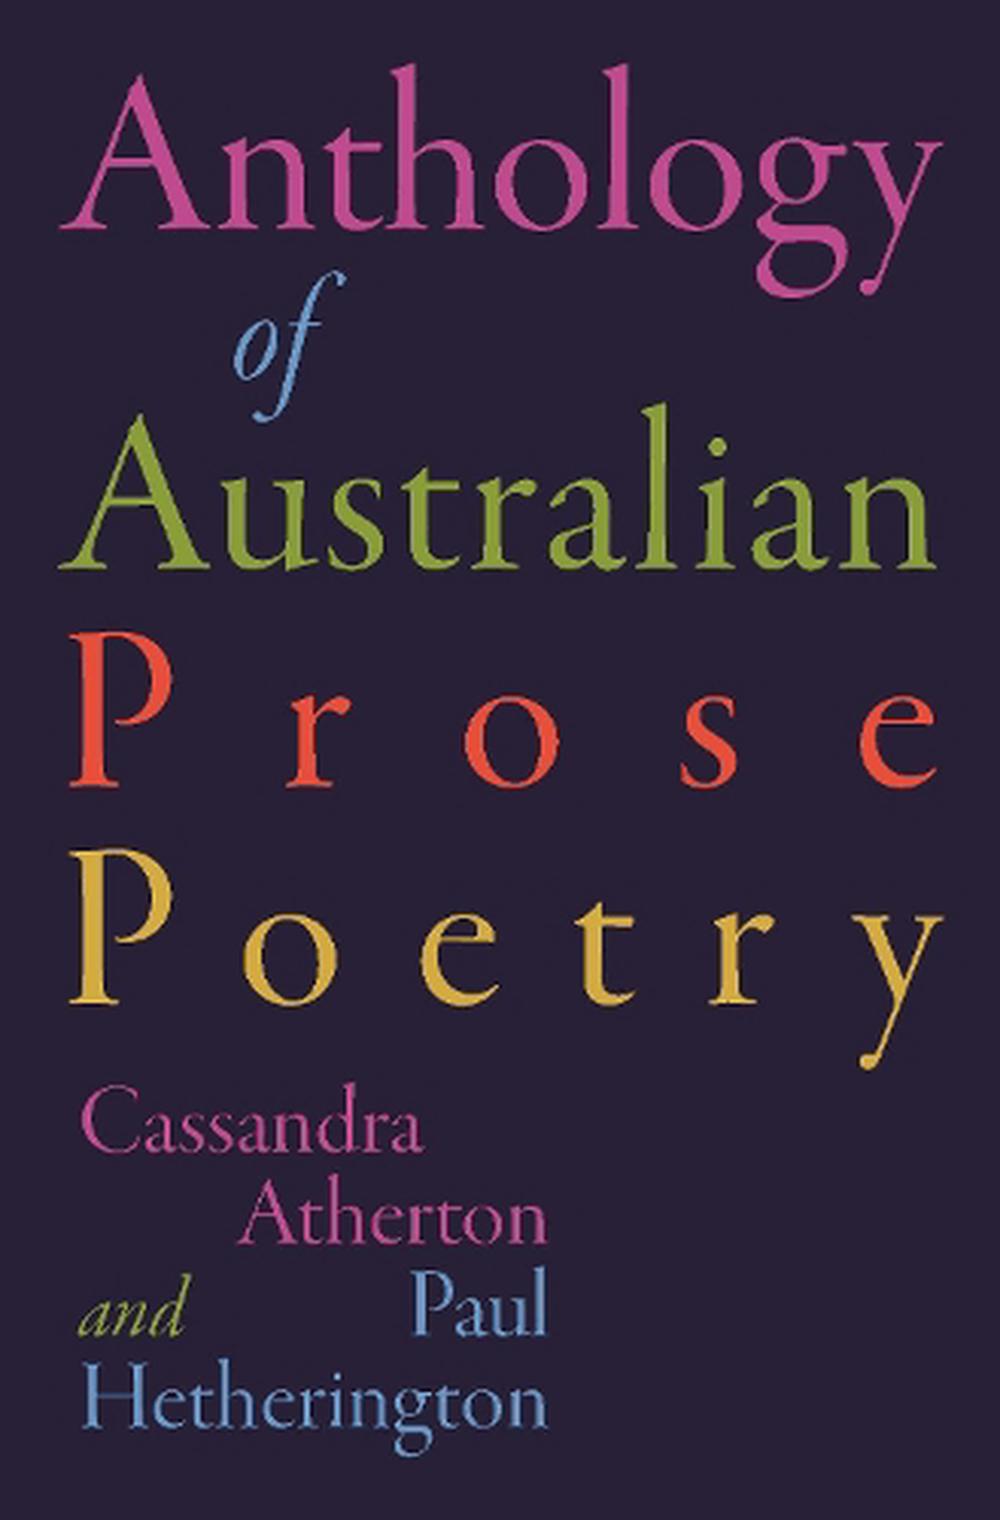 The Anthology Of Australian Prose Poetry By Cassandra Atherton Paperback 9780522874747 Buy